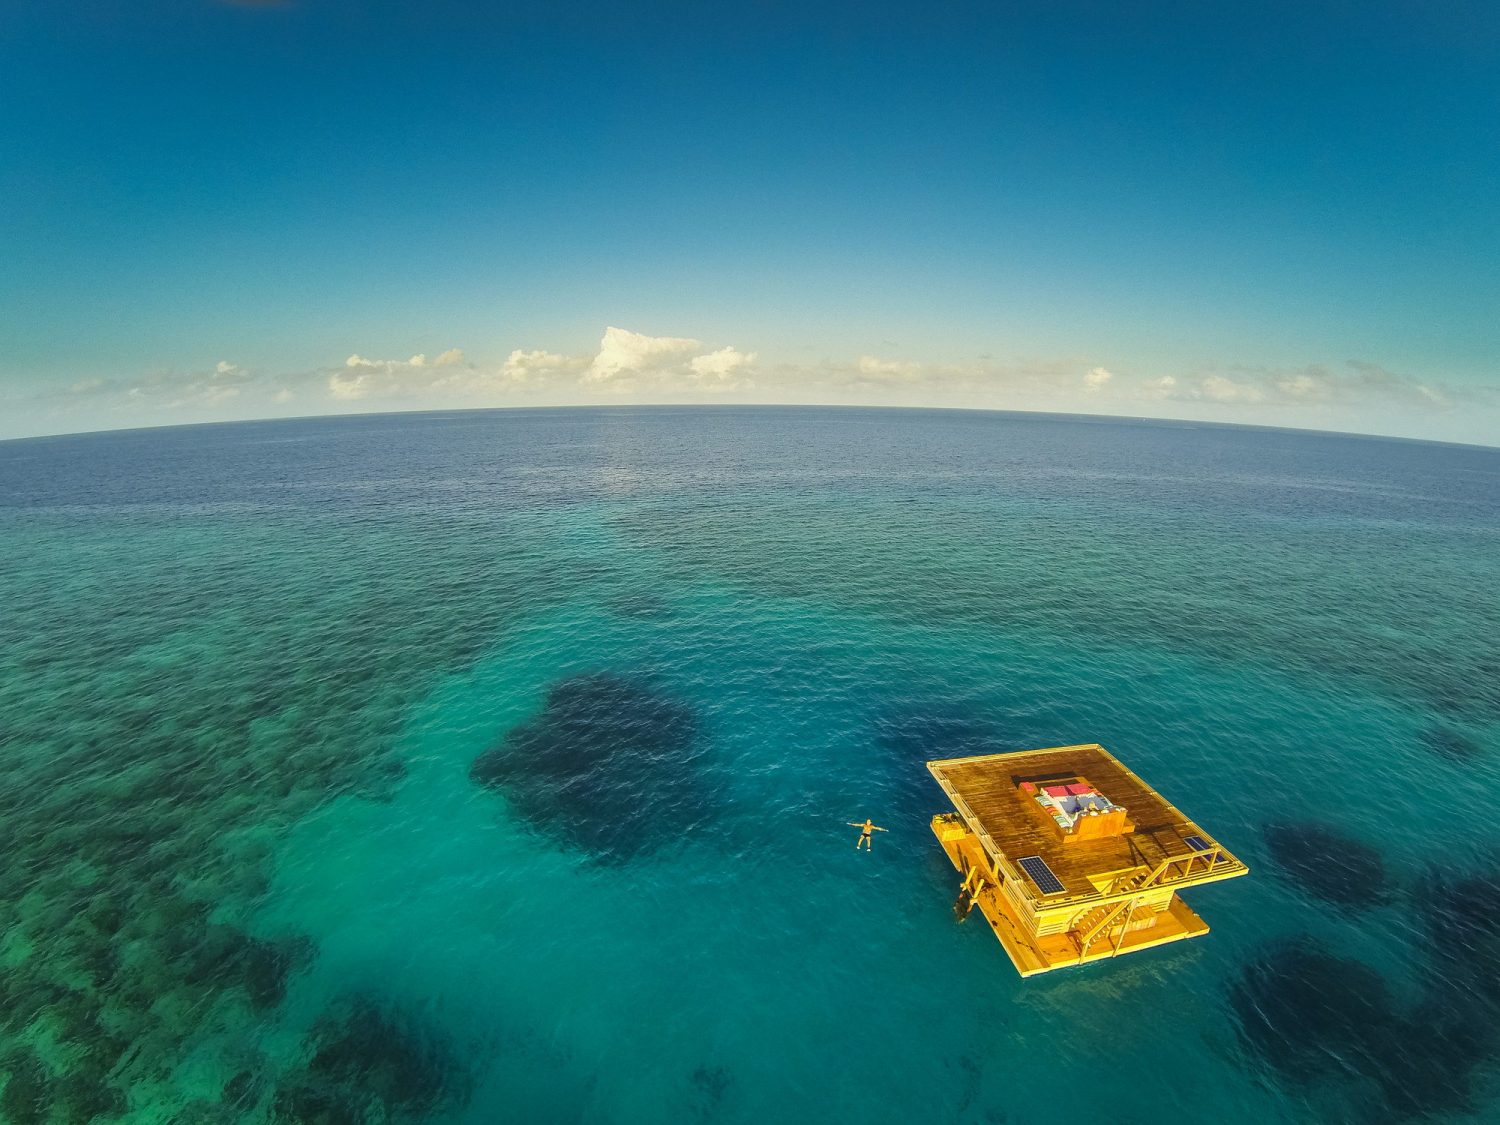 The Manta Underwater Room by Genberg Underwater Hotels